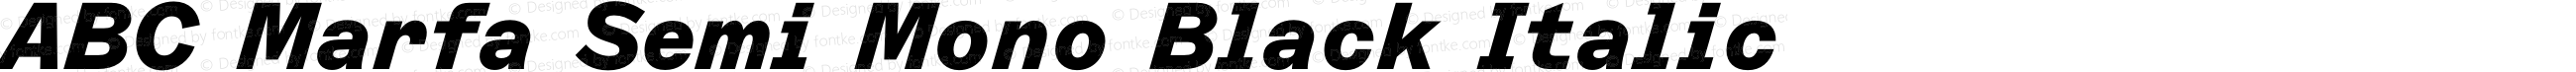 ABC Marfa Semi Mono Black Italic